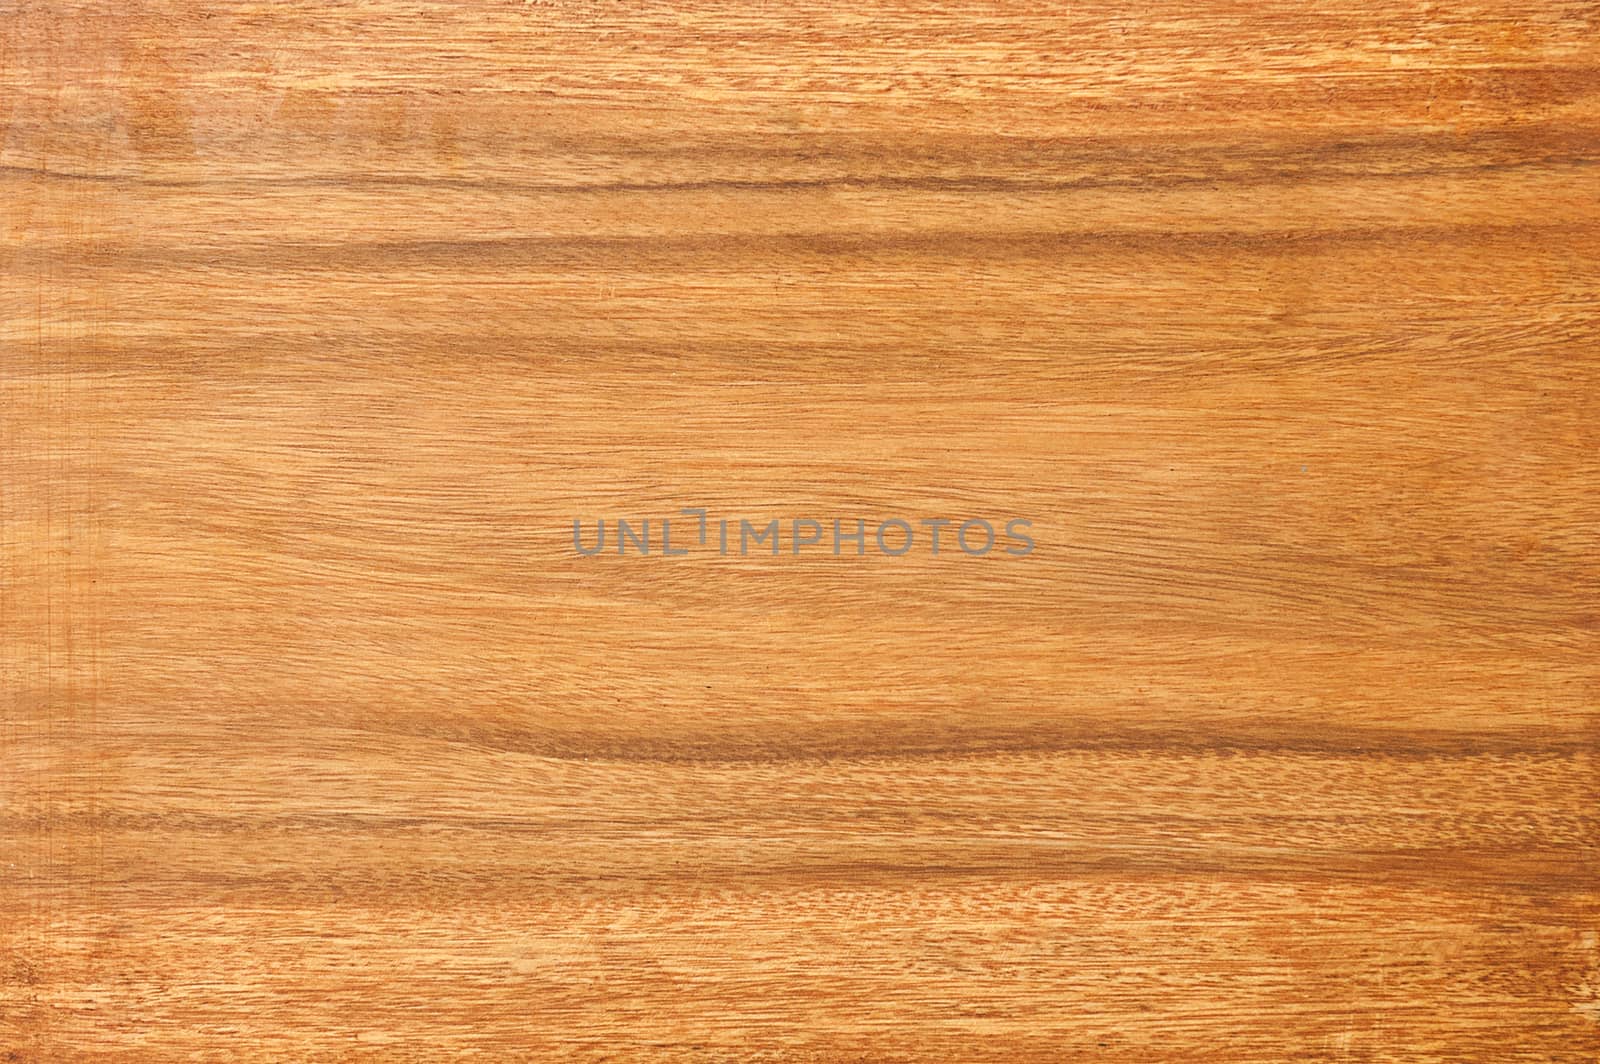 Wooden parquet floor planks. Wooden background.